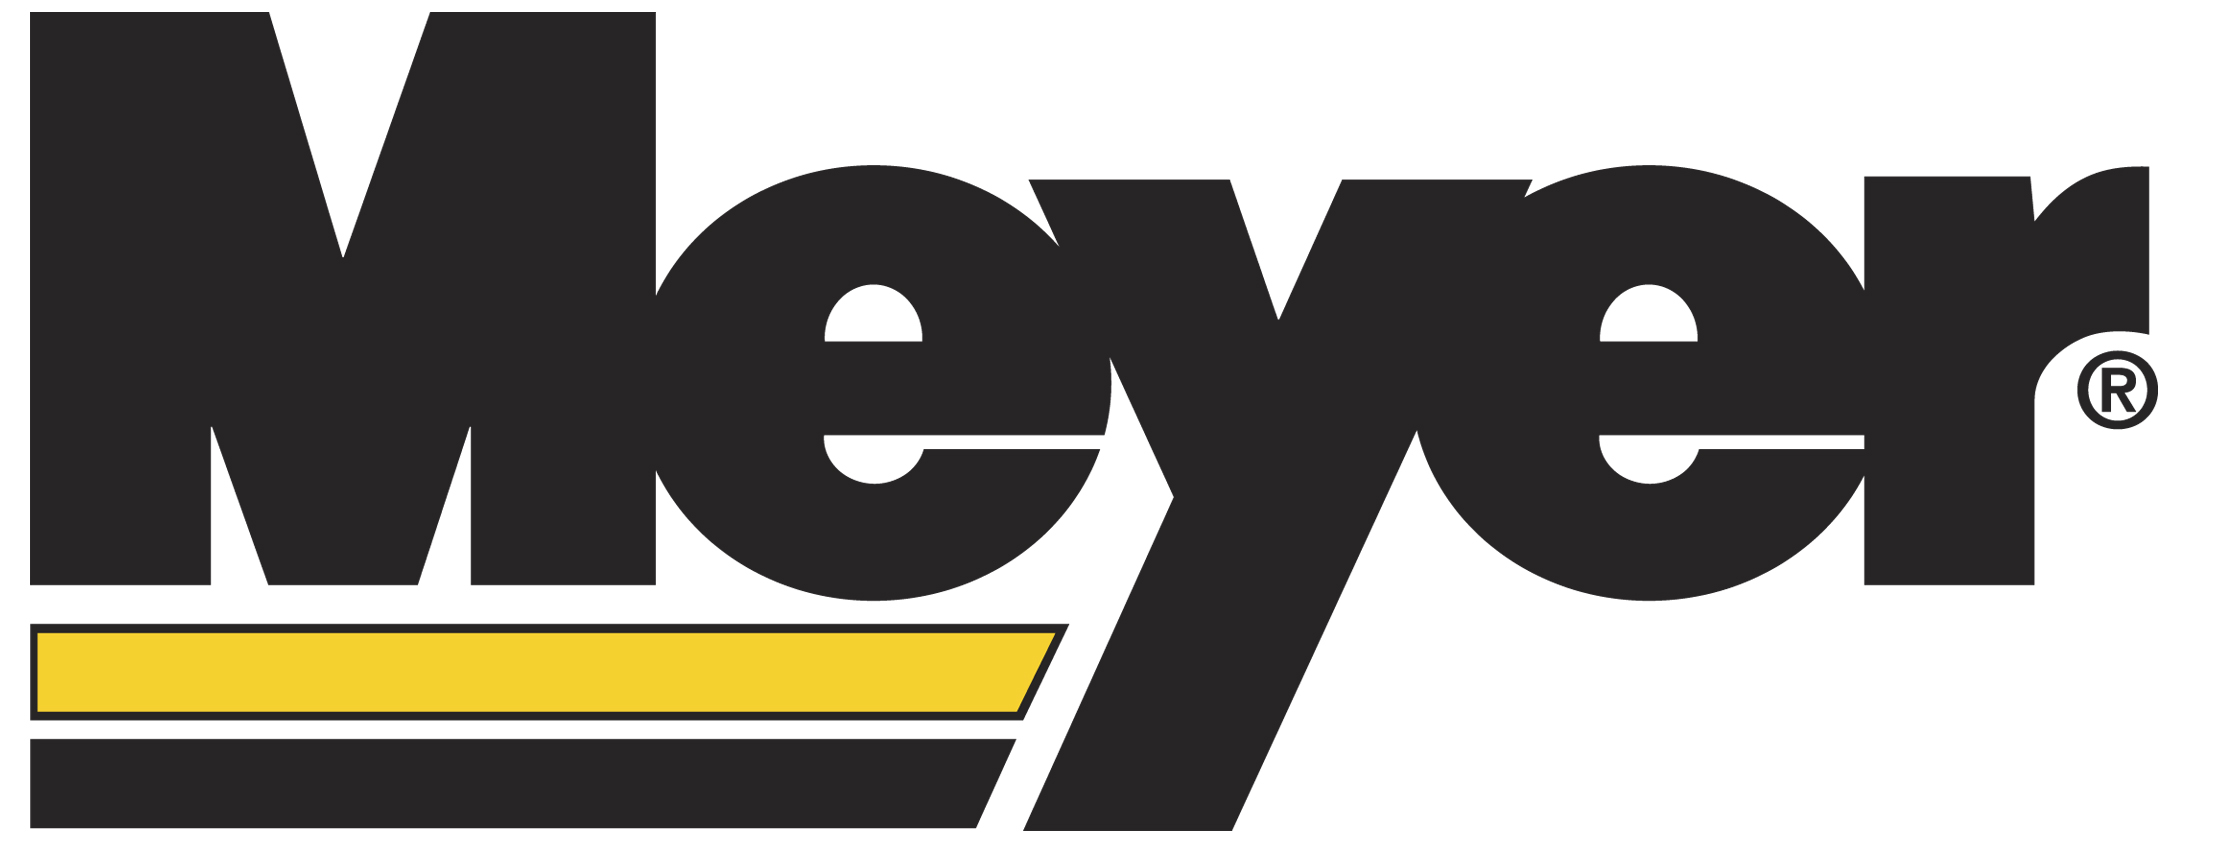 meyer_logo_2008